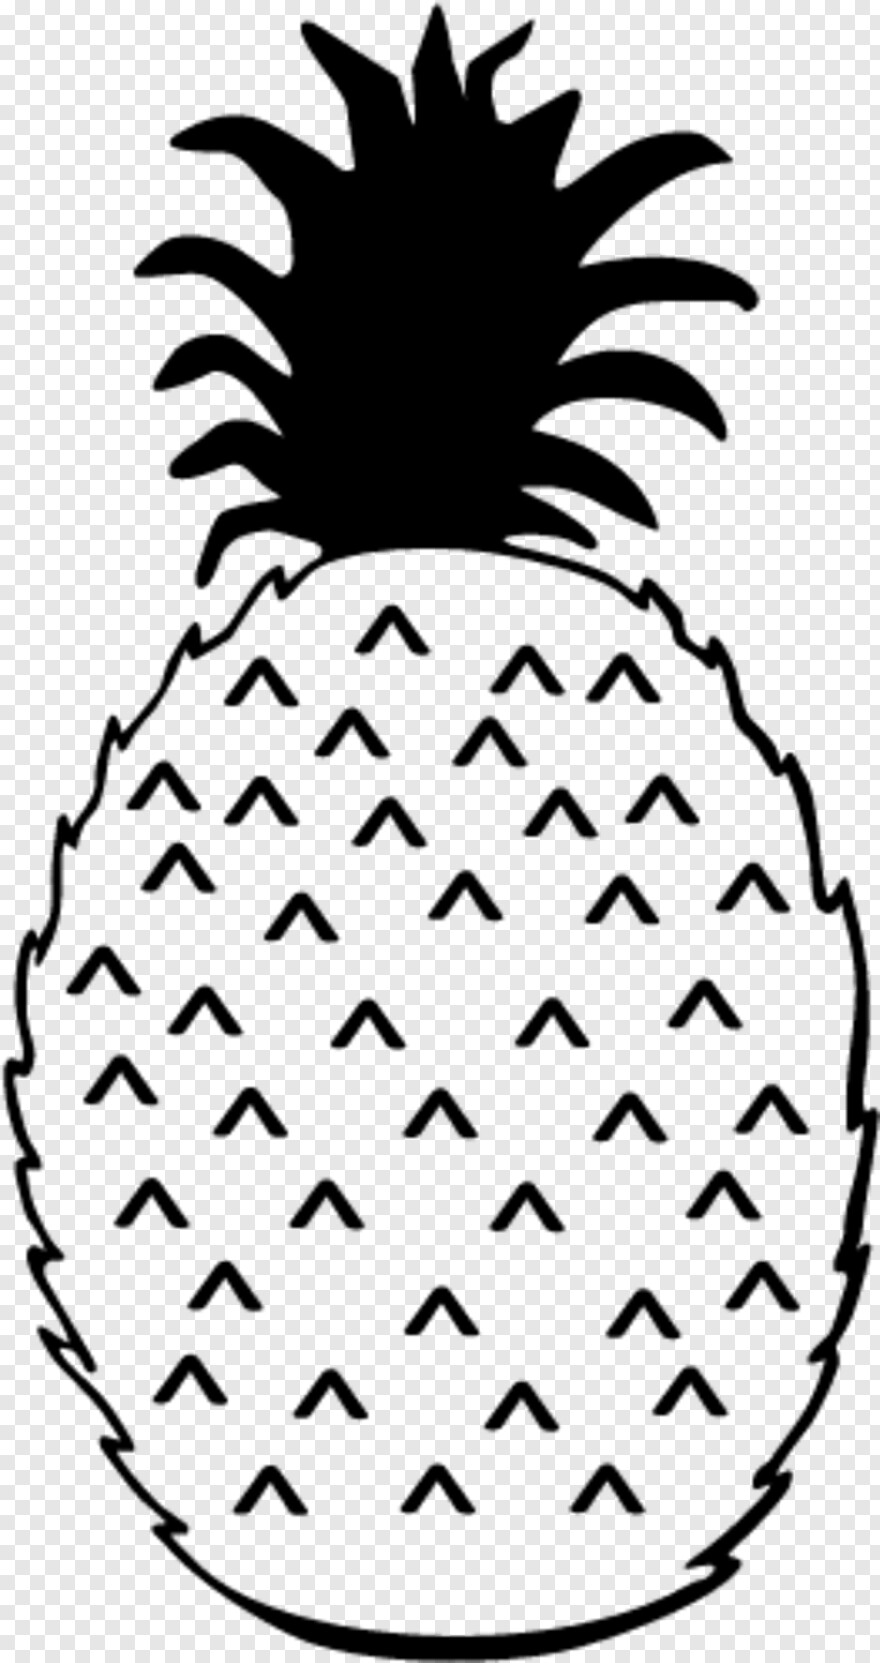 pineapple # 654151